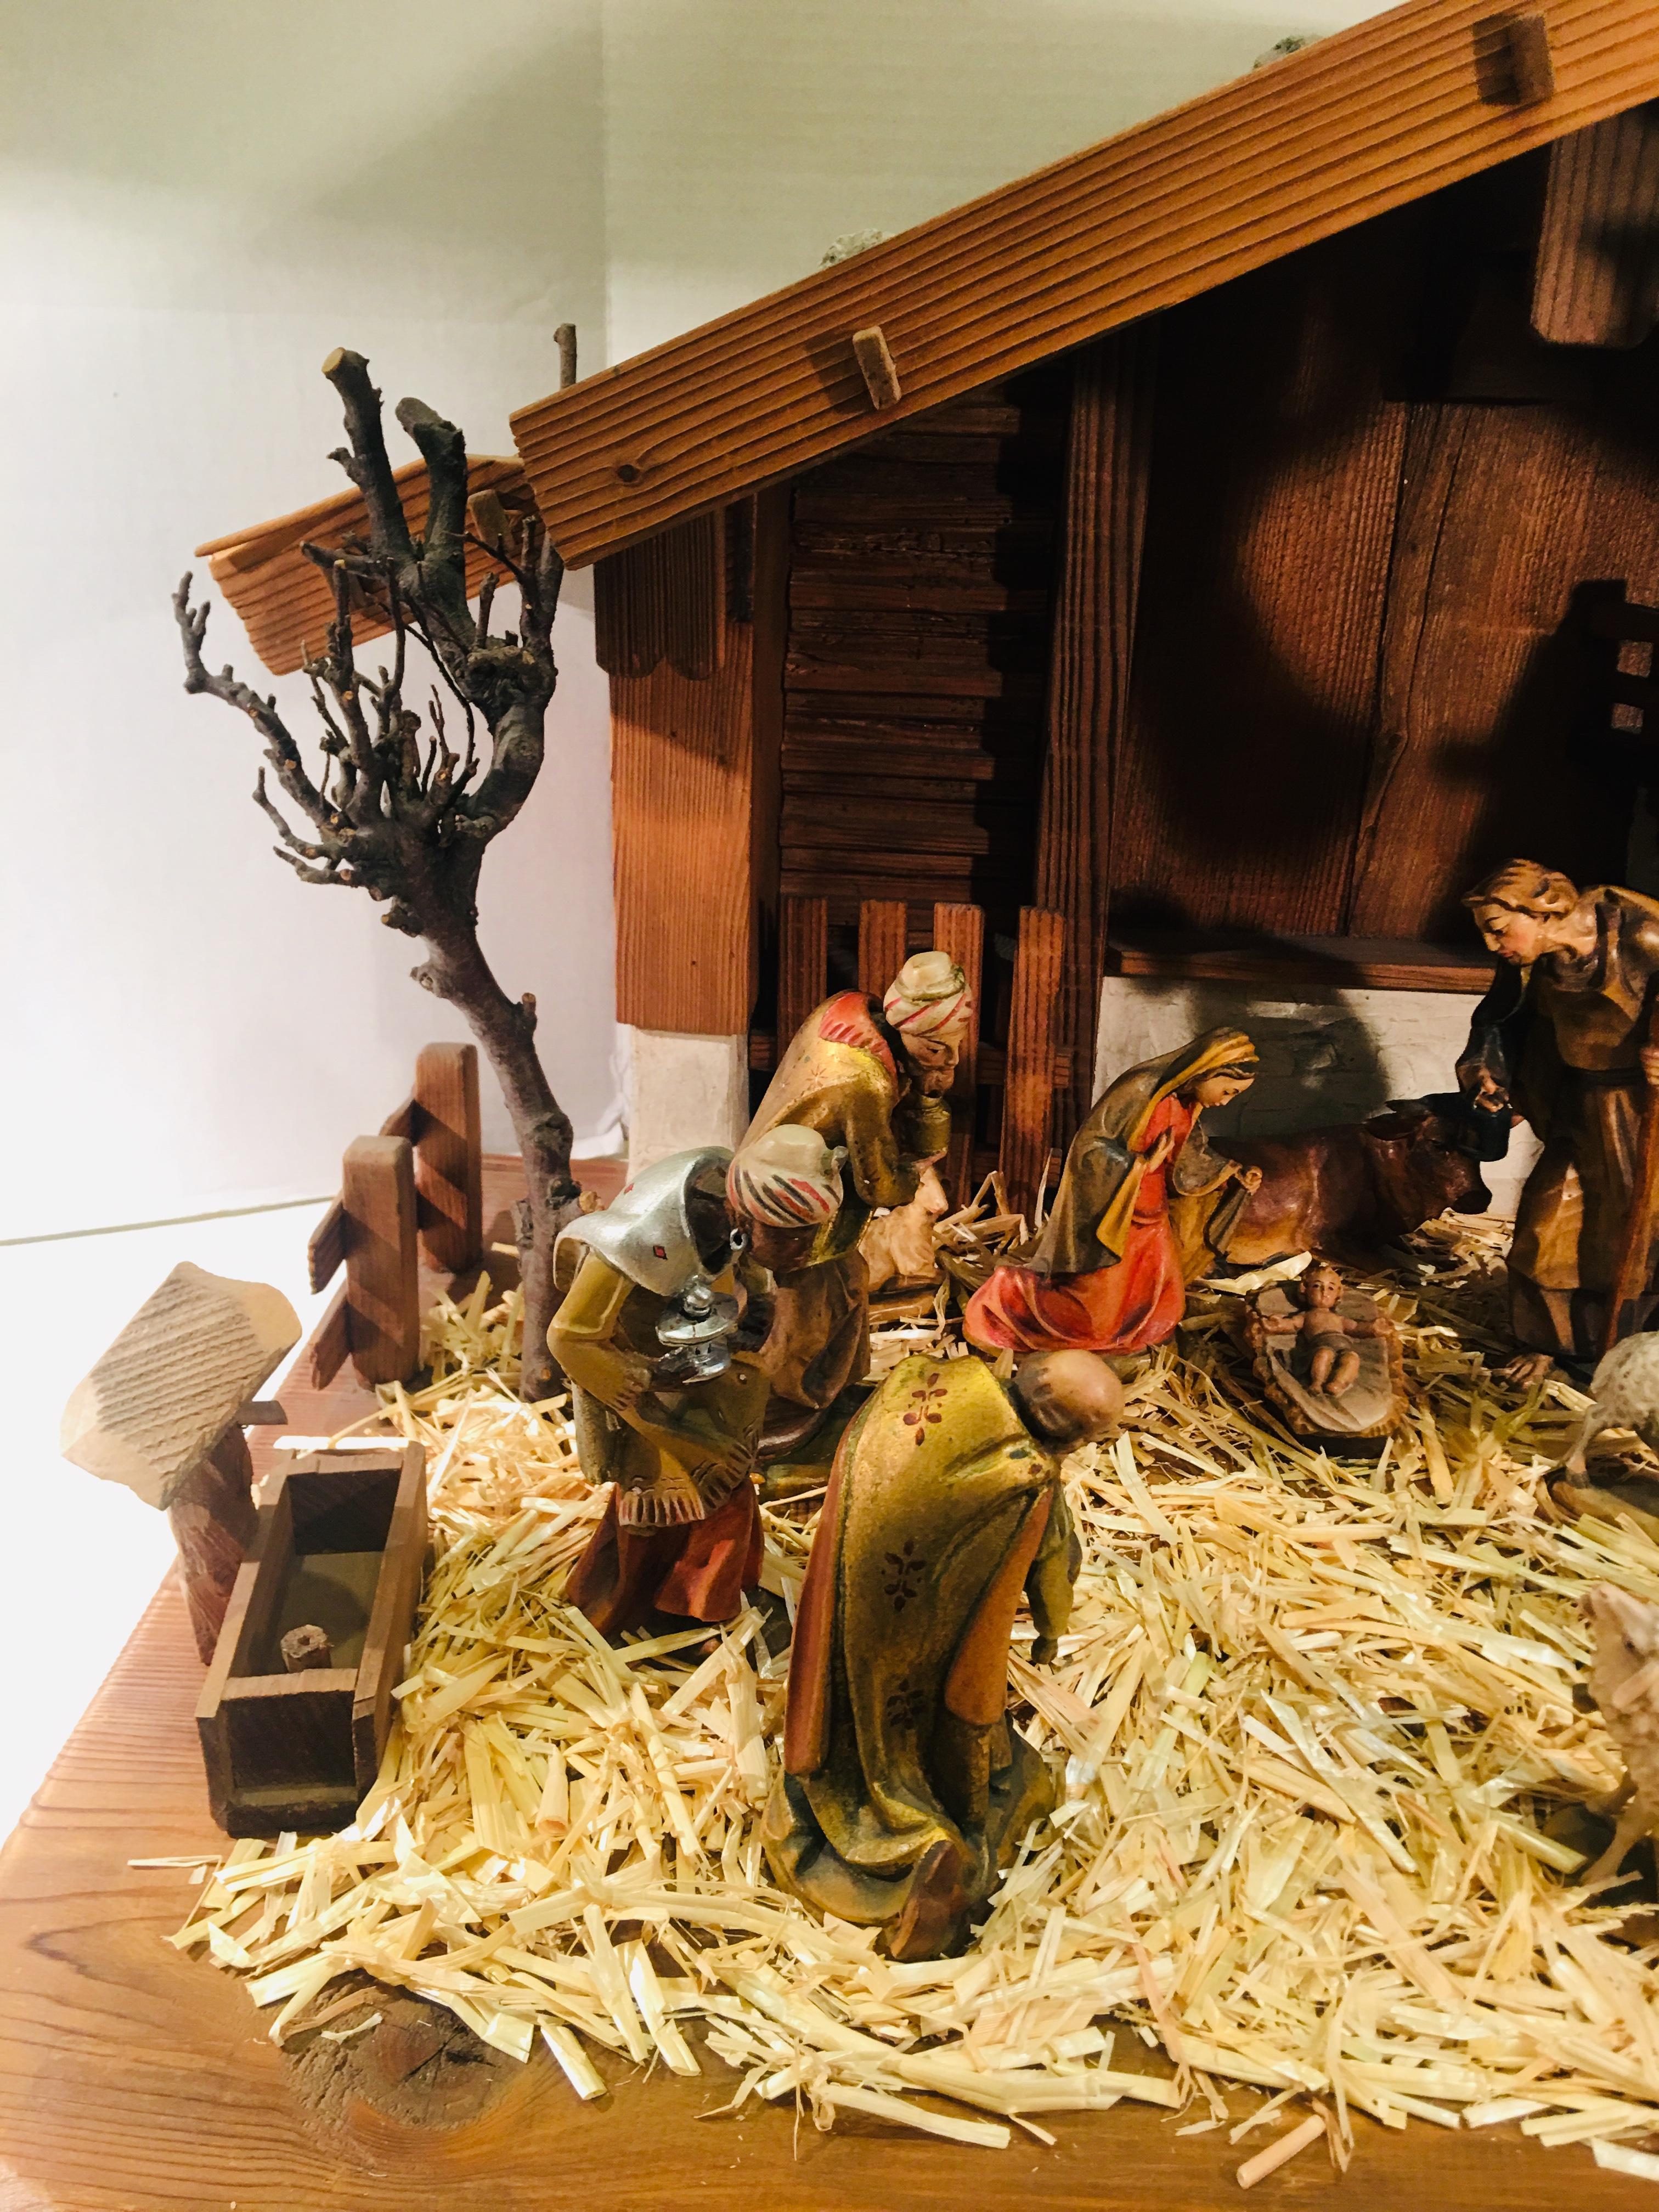 17 piece nativity set